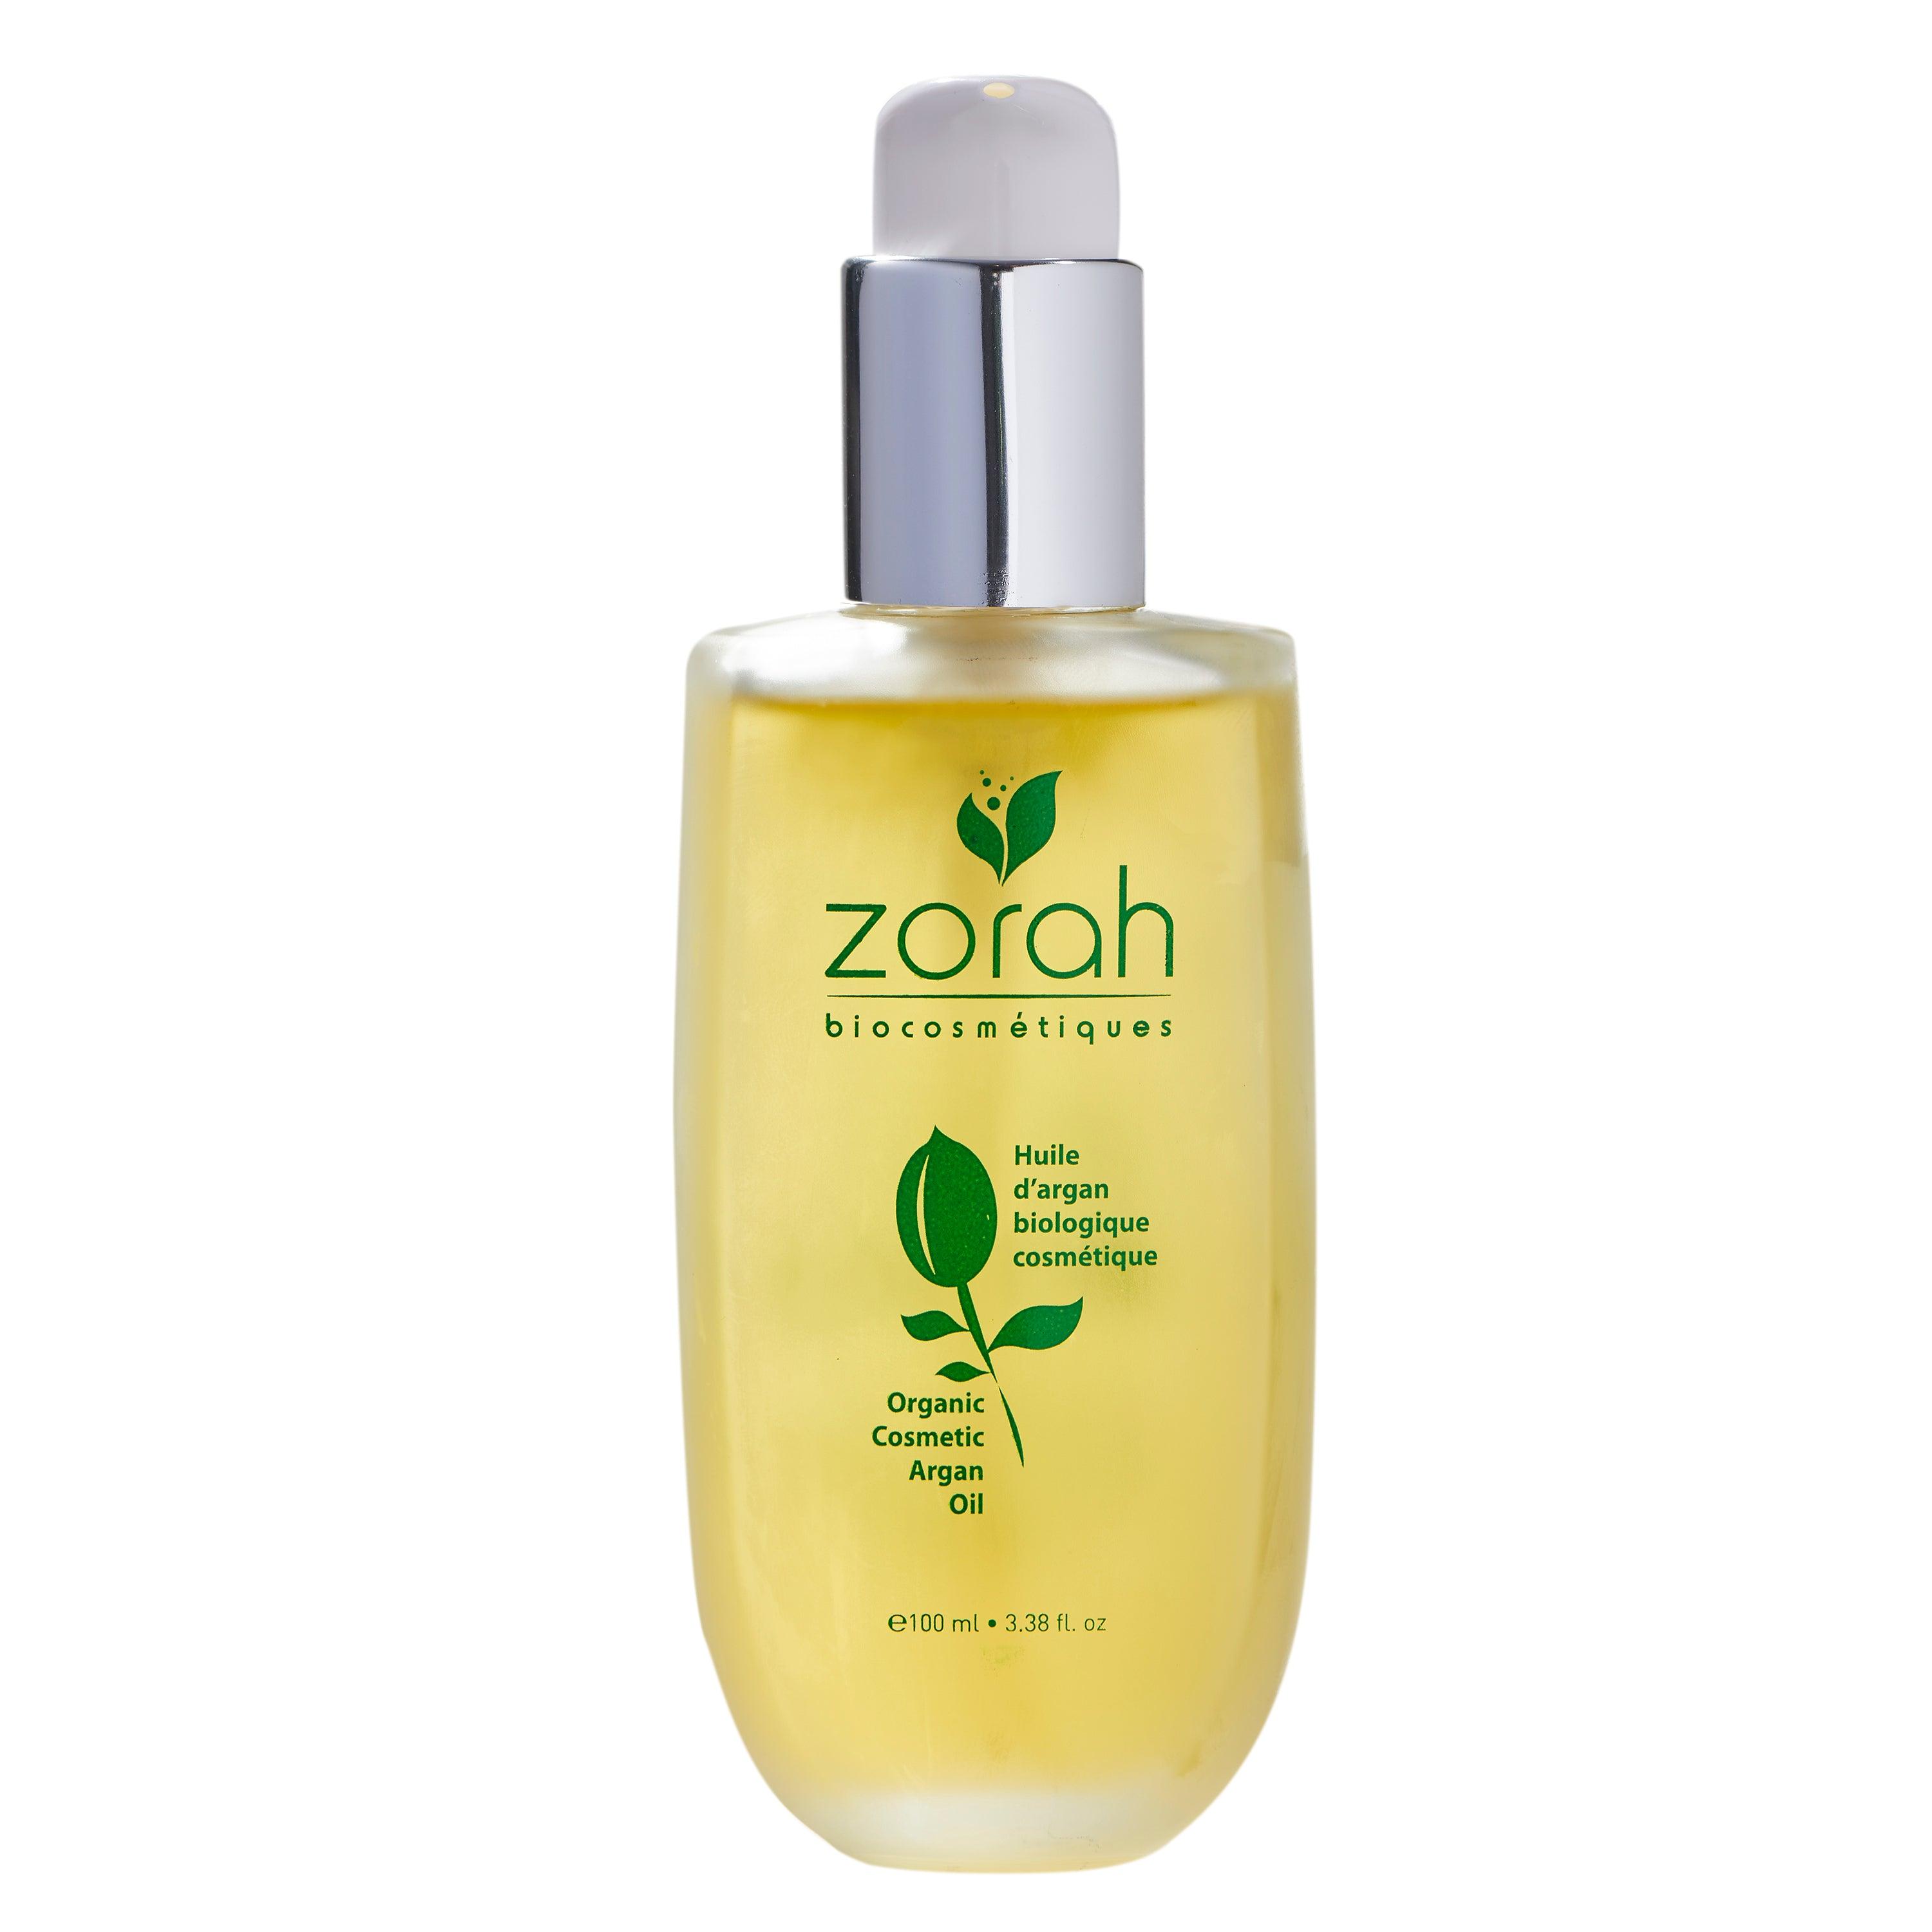 pure organic argan oil - Zorah biocosmétiques